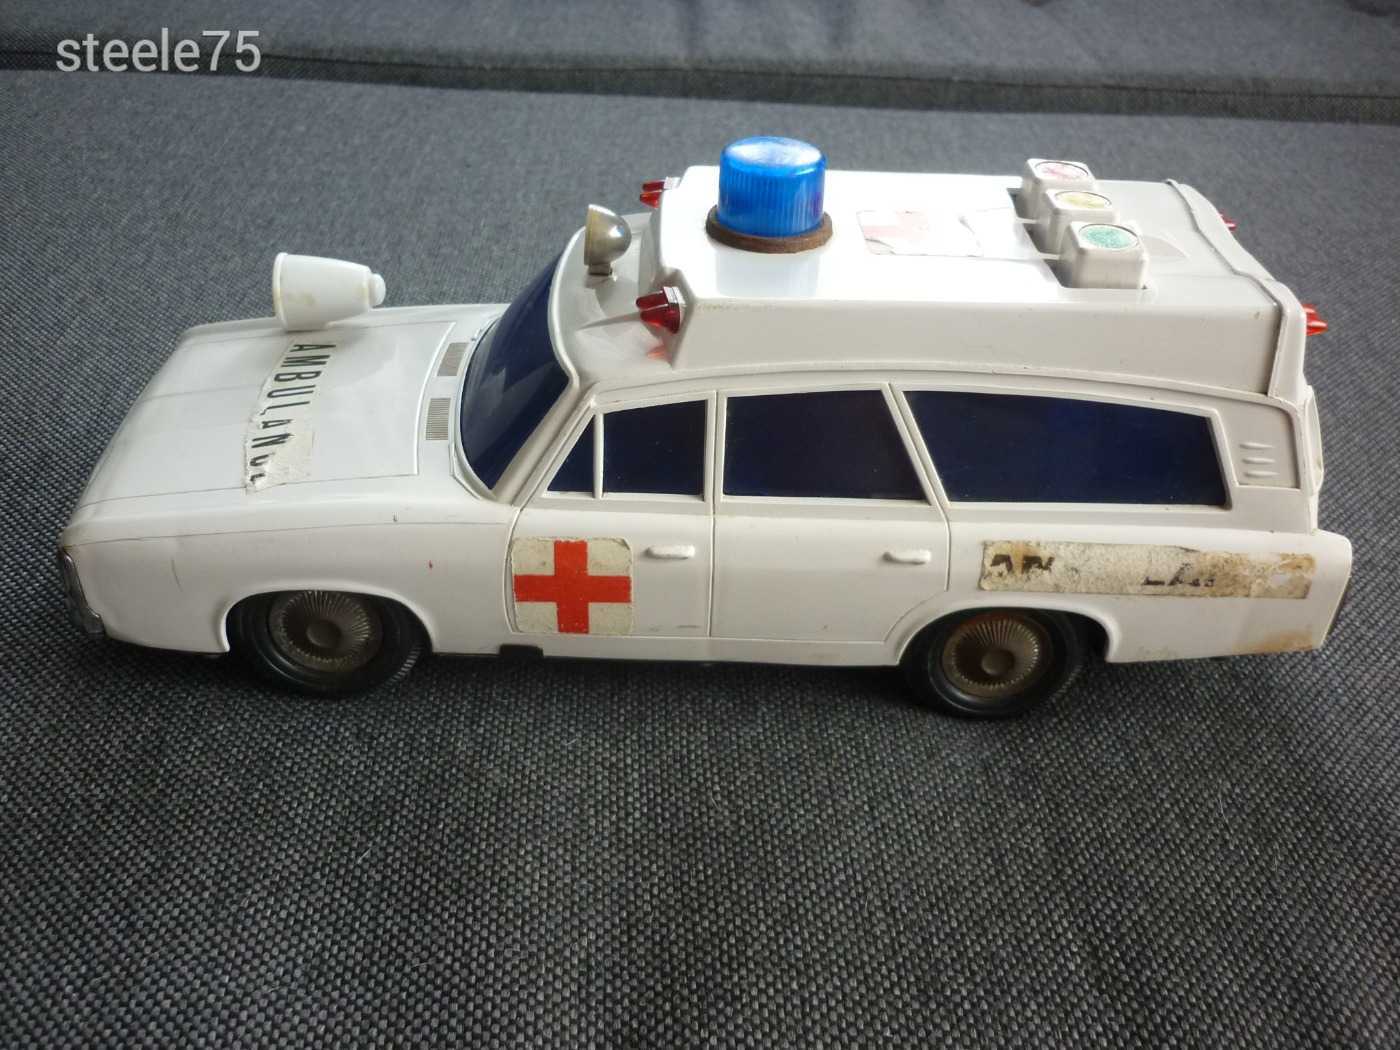 alps-ambulance-car-bolygokerekes-mentoauto-made-in-japan-886c_1_big.jpg